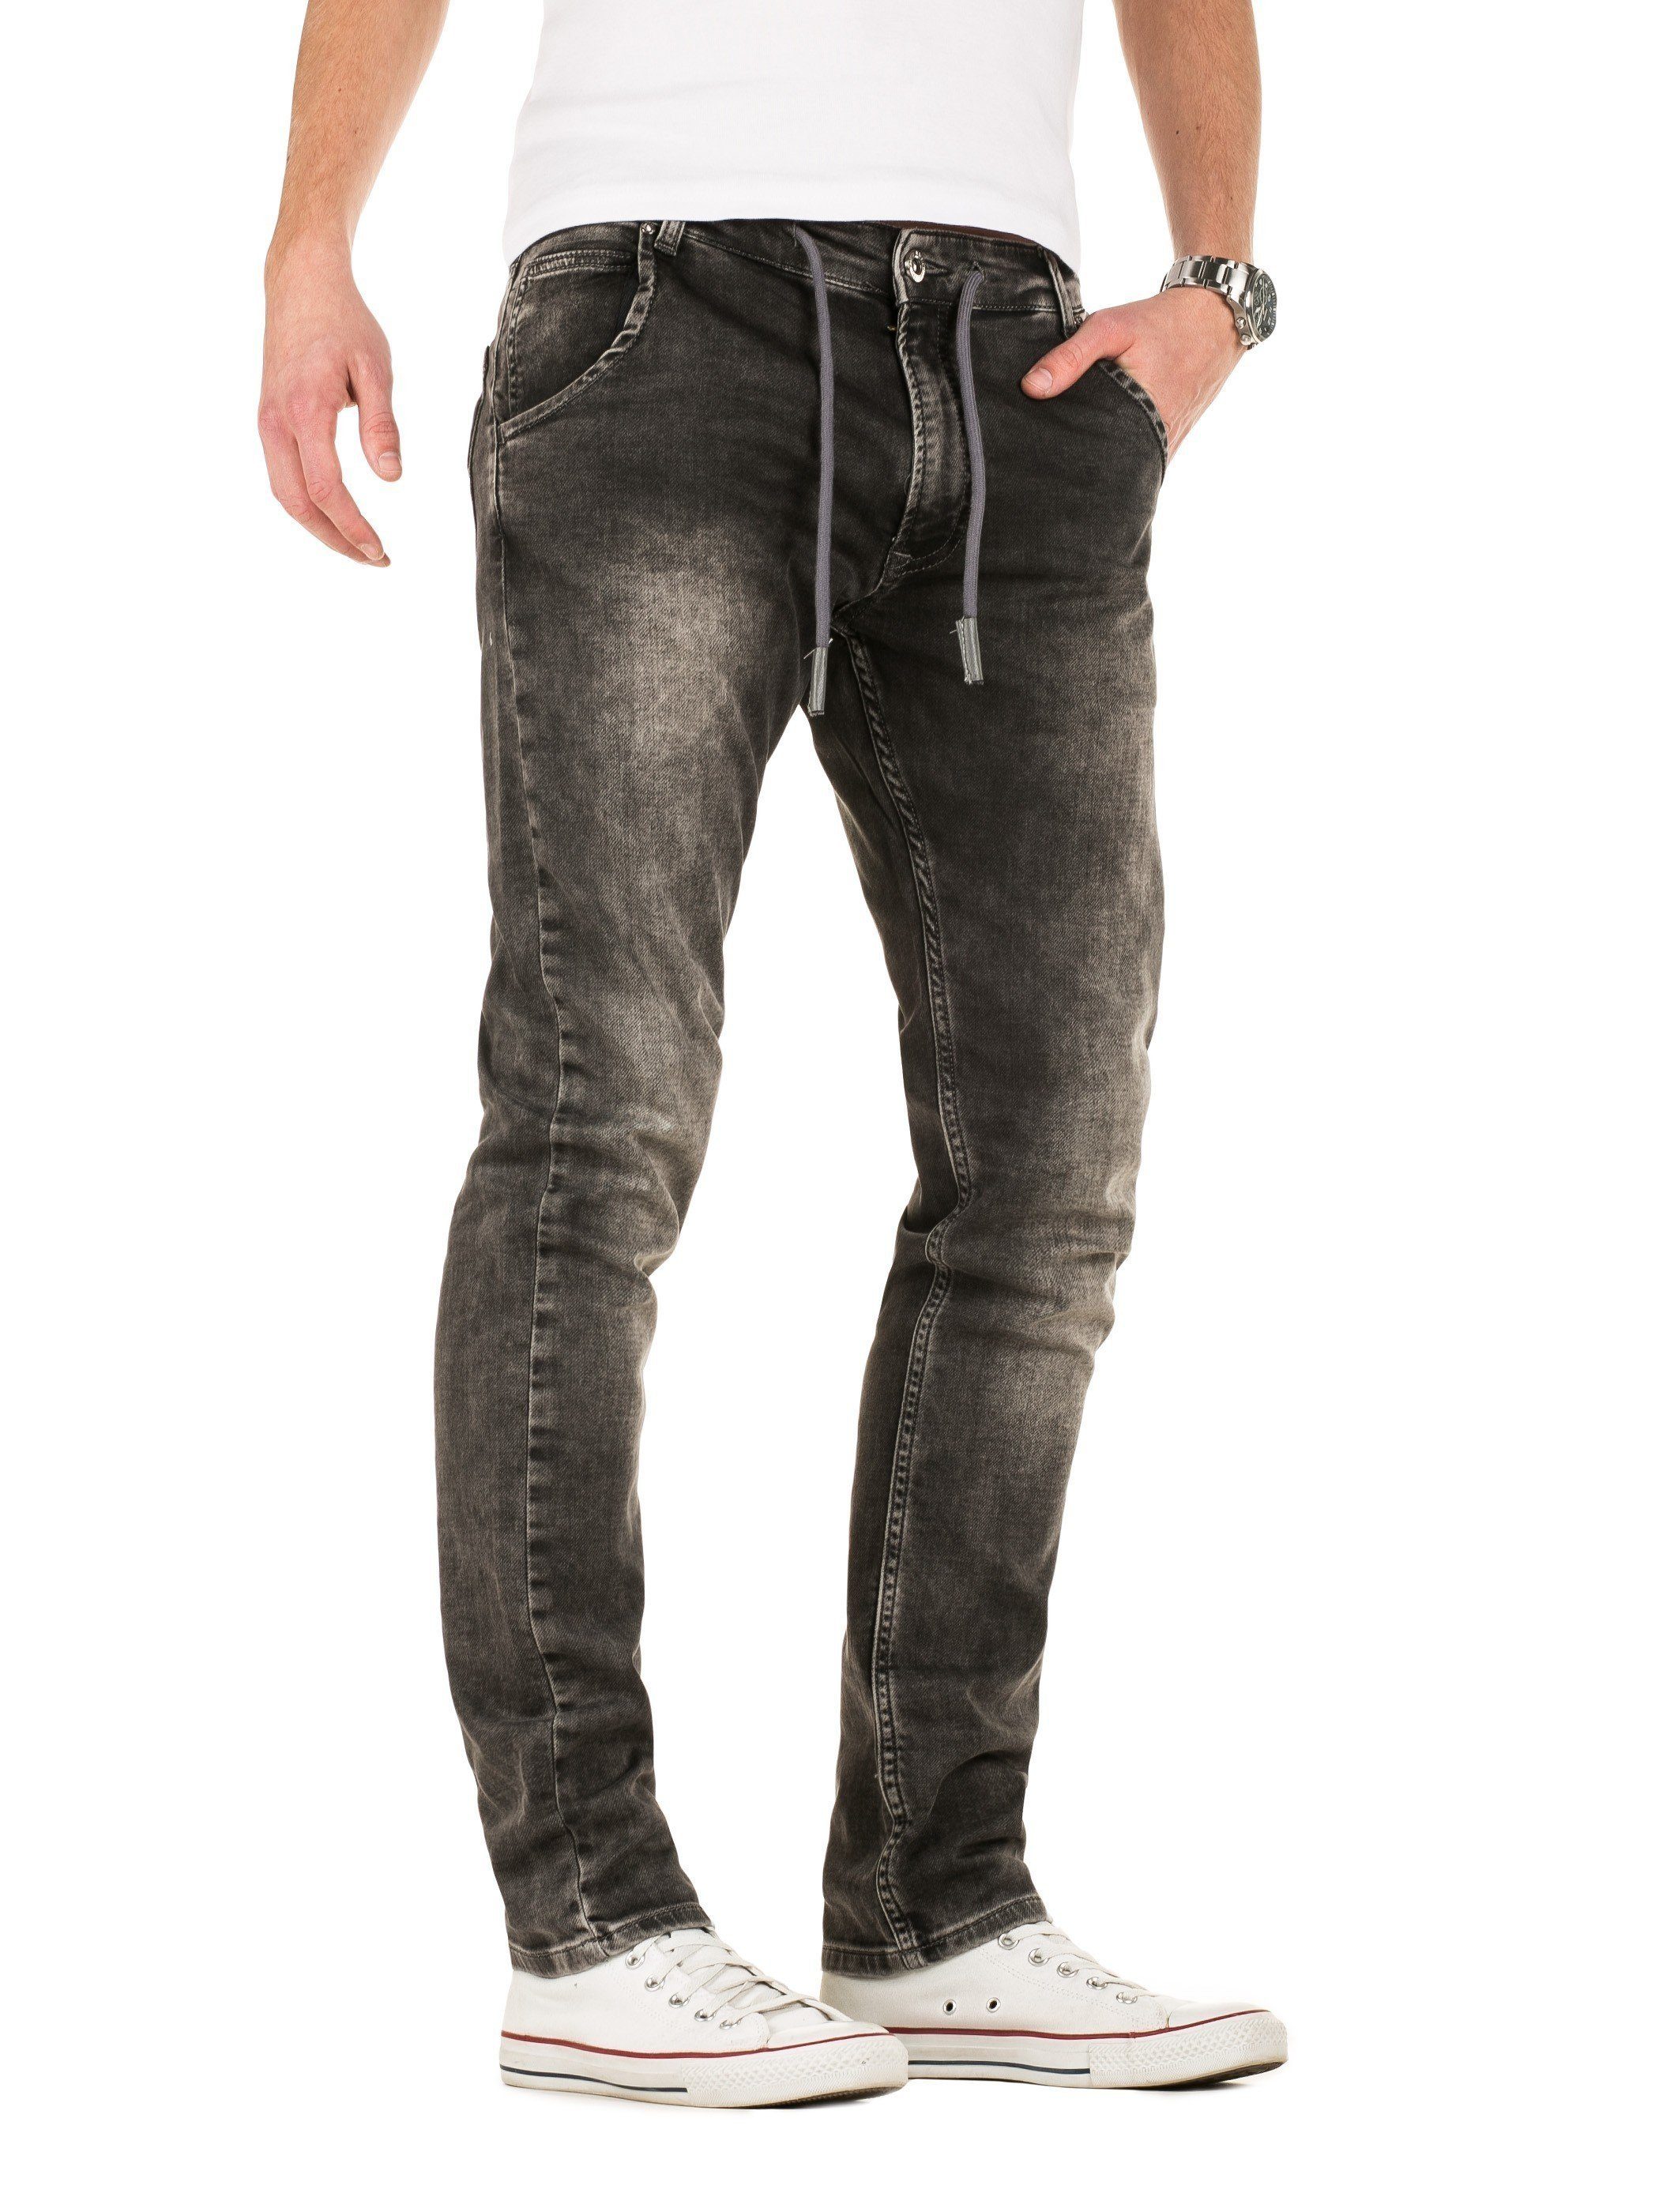 WOTEGA Slim-fit-Jeans Herren Jogginghose Joshua Jogging Jeans-Look (raven Denim Grau in Stretch 19000) Sweathosen Hose Jeans in grey